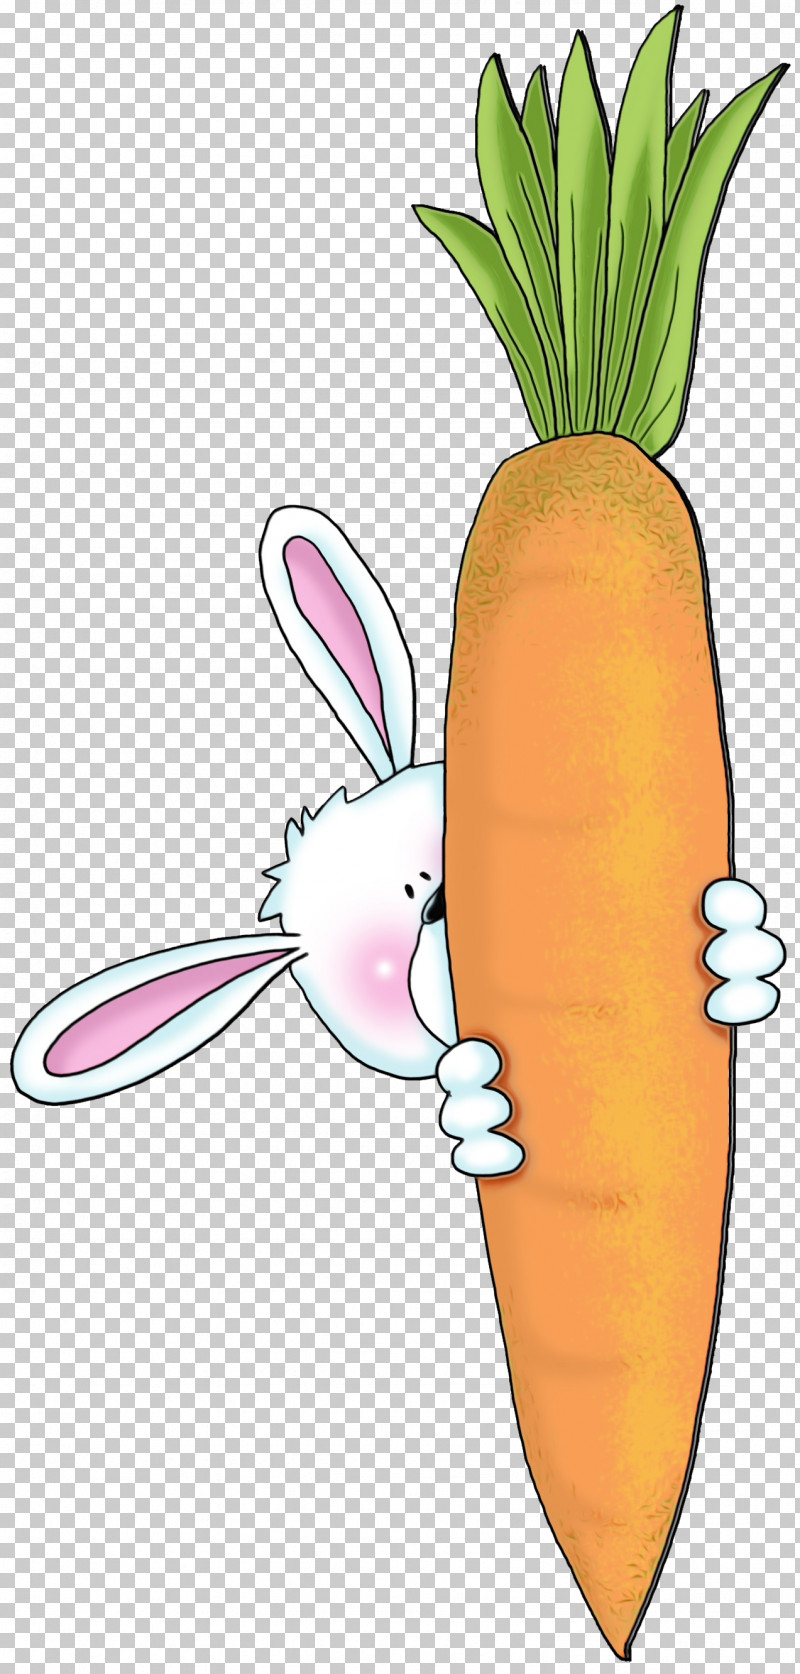 Carrot Radish Root Vegetable Vegetable Daikon PNG, Clipart, Baby Carrot, Carrot, Cartoon, Daikon, Food Free PNG Download